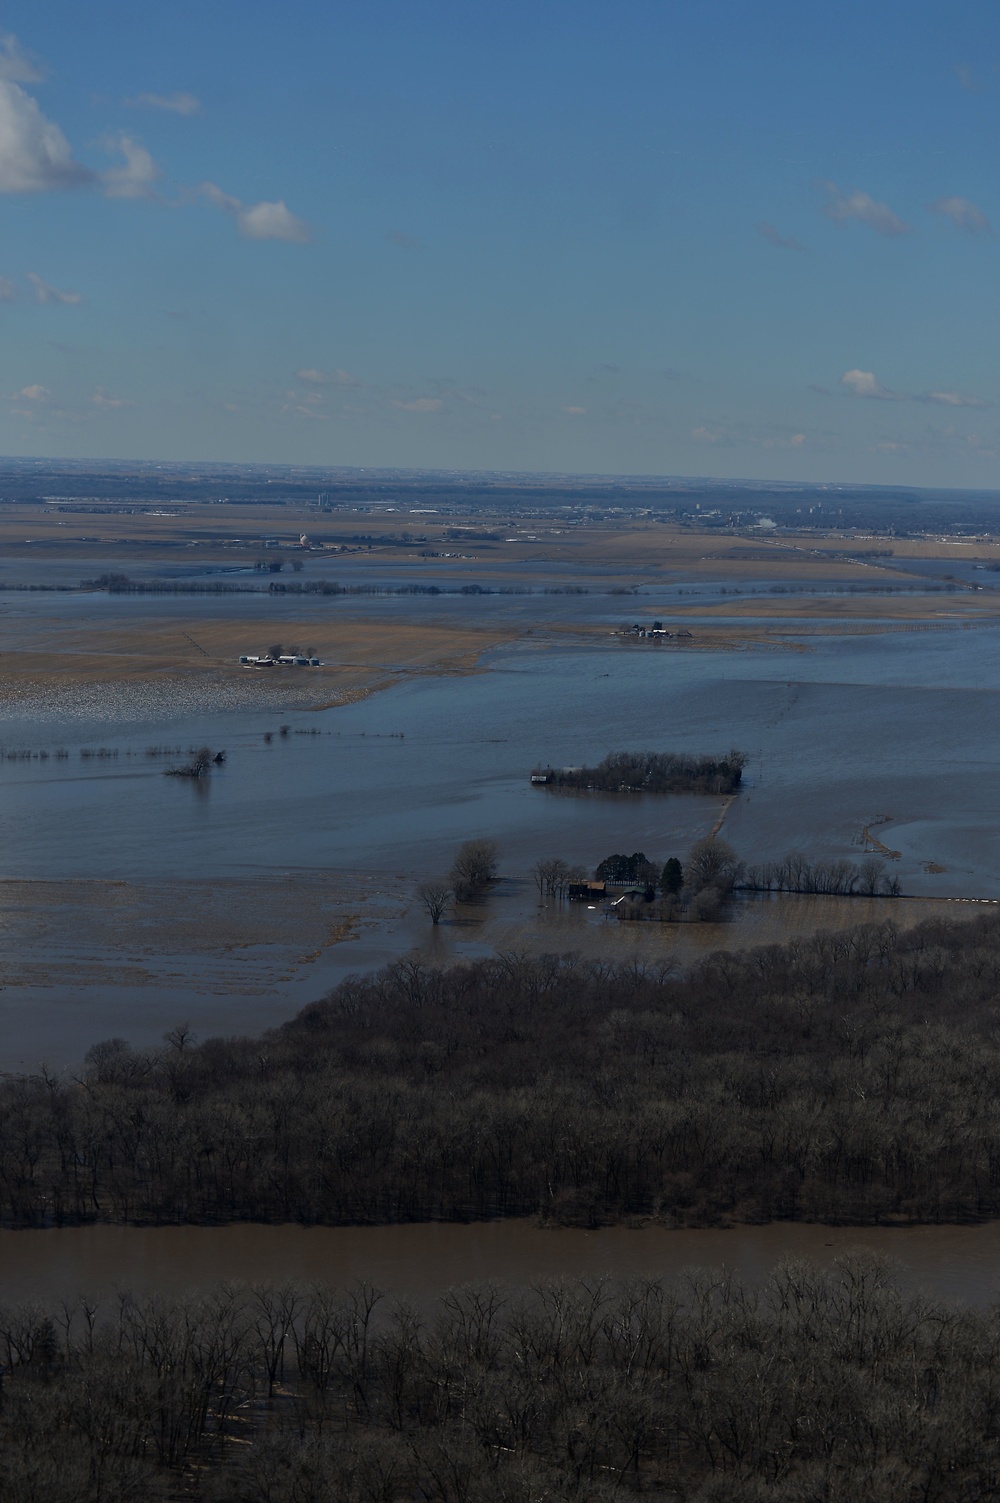 Governor Pete Ricketts, the Adjutant General Conduct Aerial Observation of Nebraska Flooding